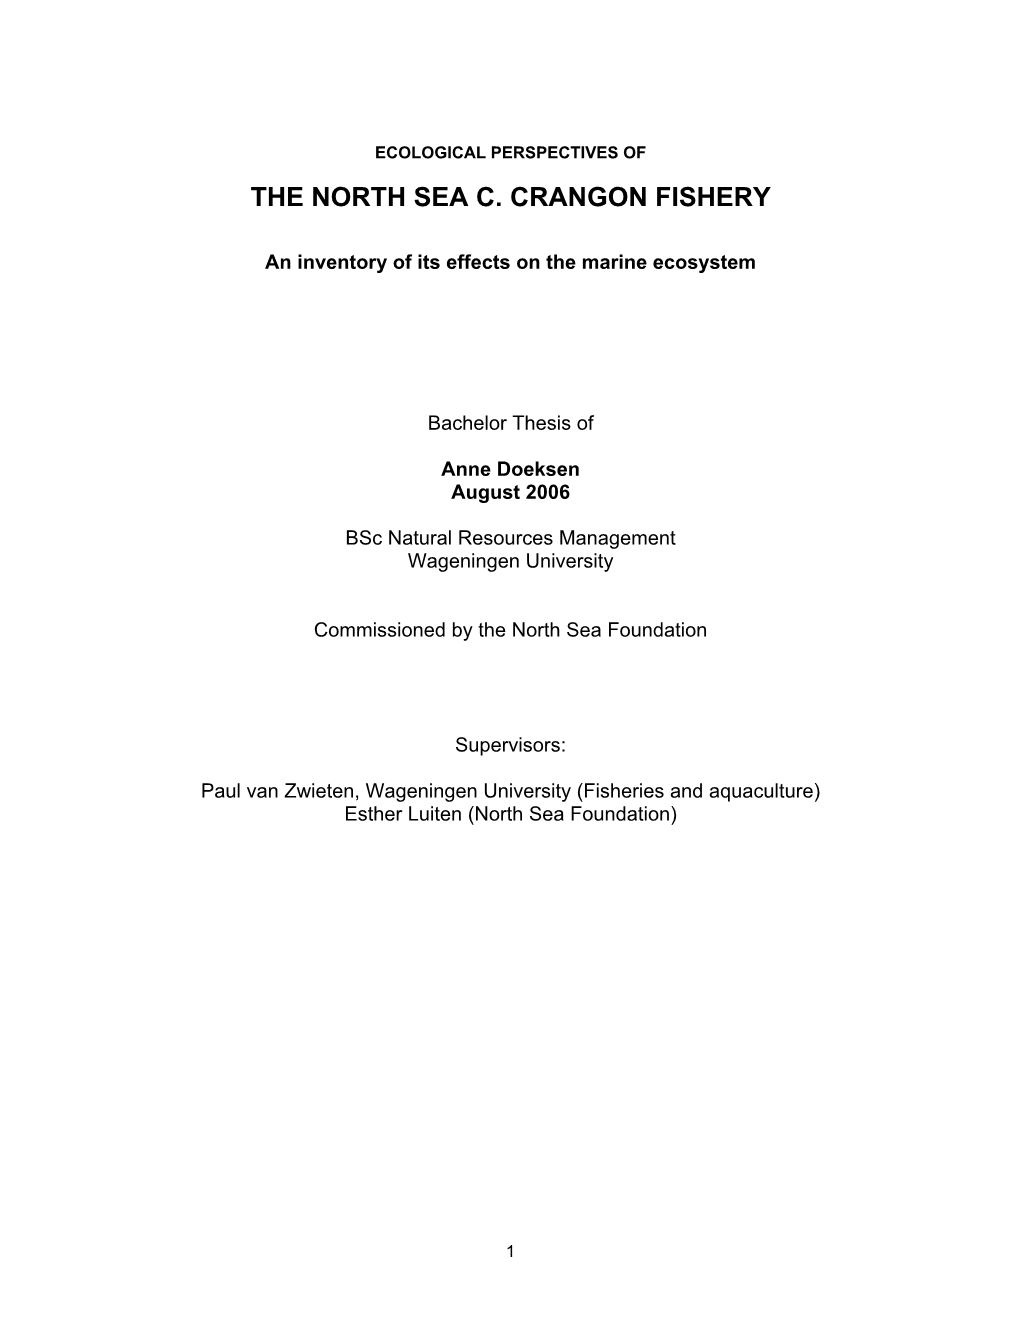 The North Sea C. Crangon Fishery